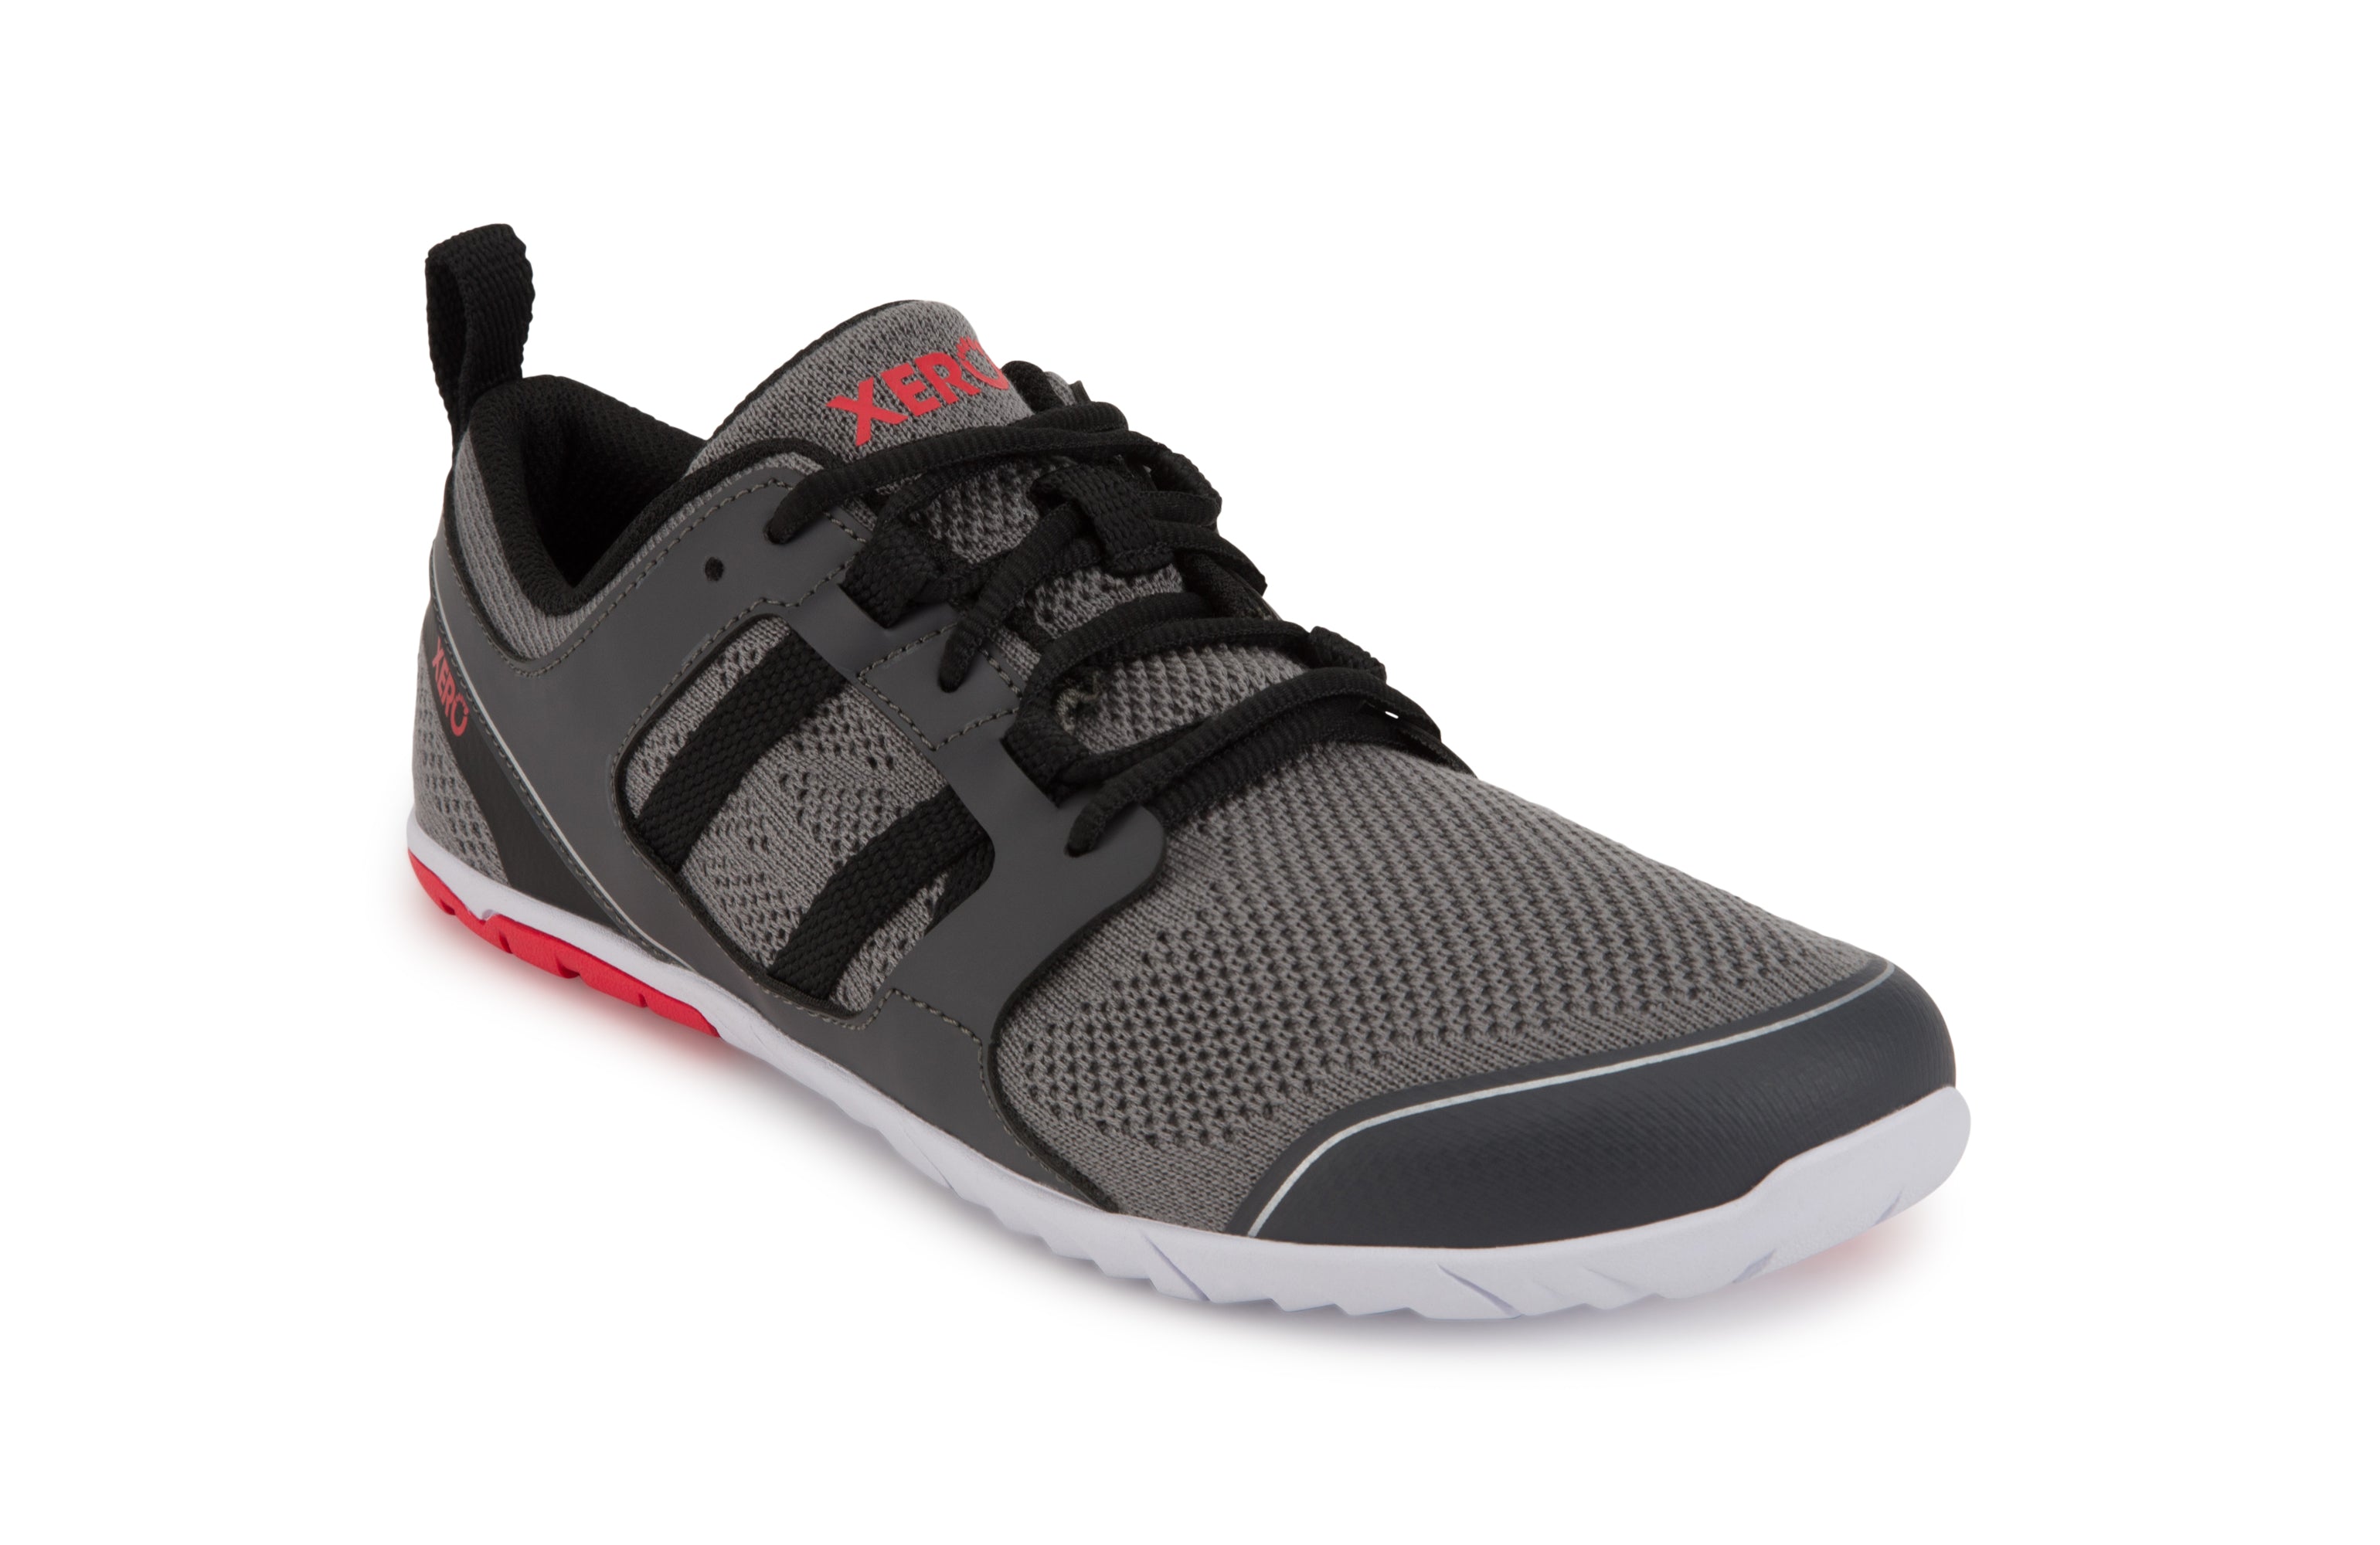 Xero Shoes Zelen Mens barfods sneaker træningssko til mænd i farven dark gray / red, vinklet